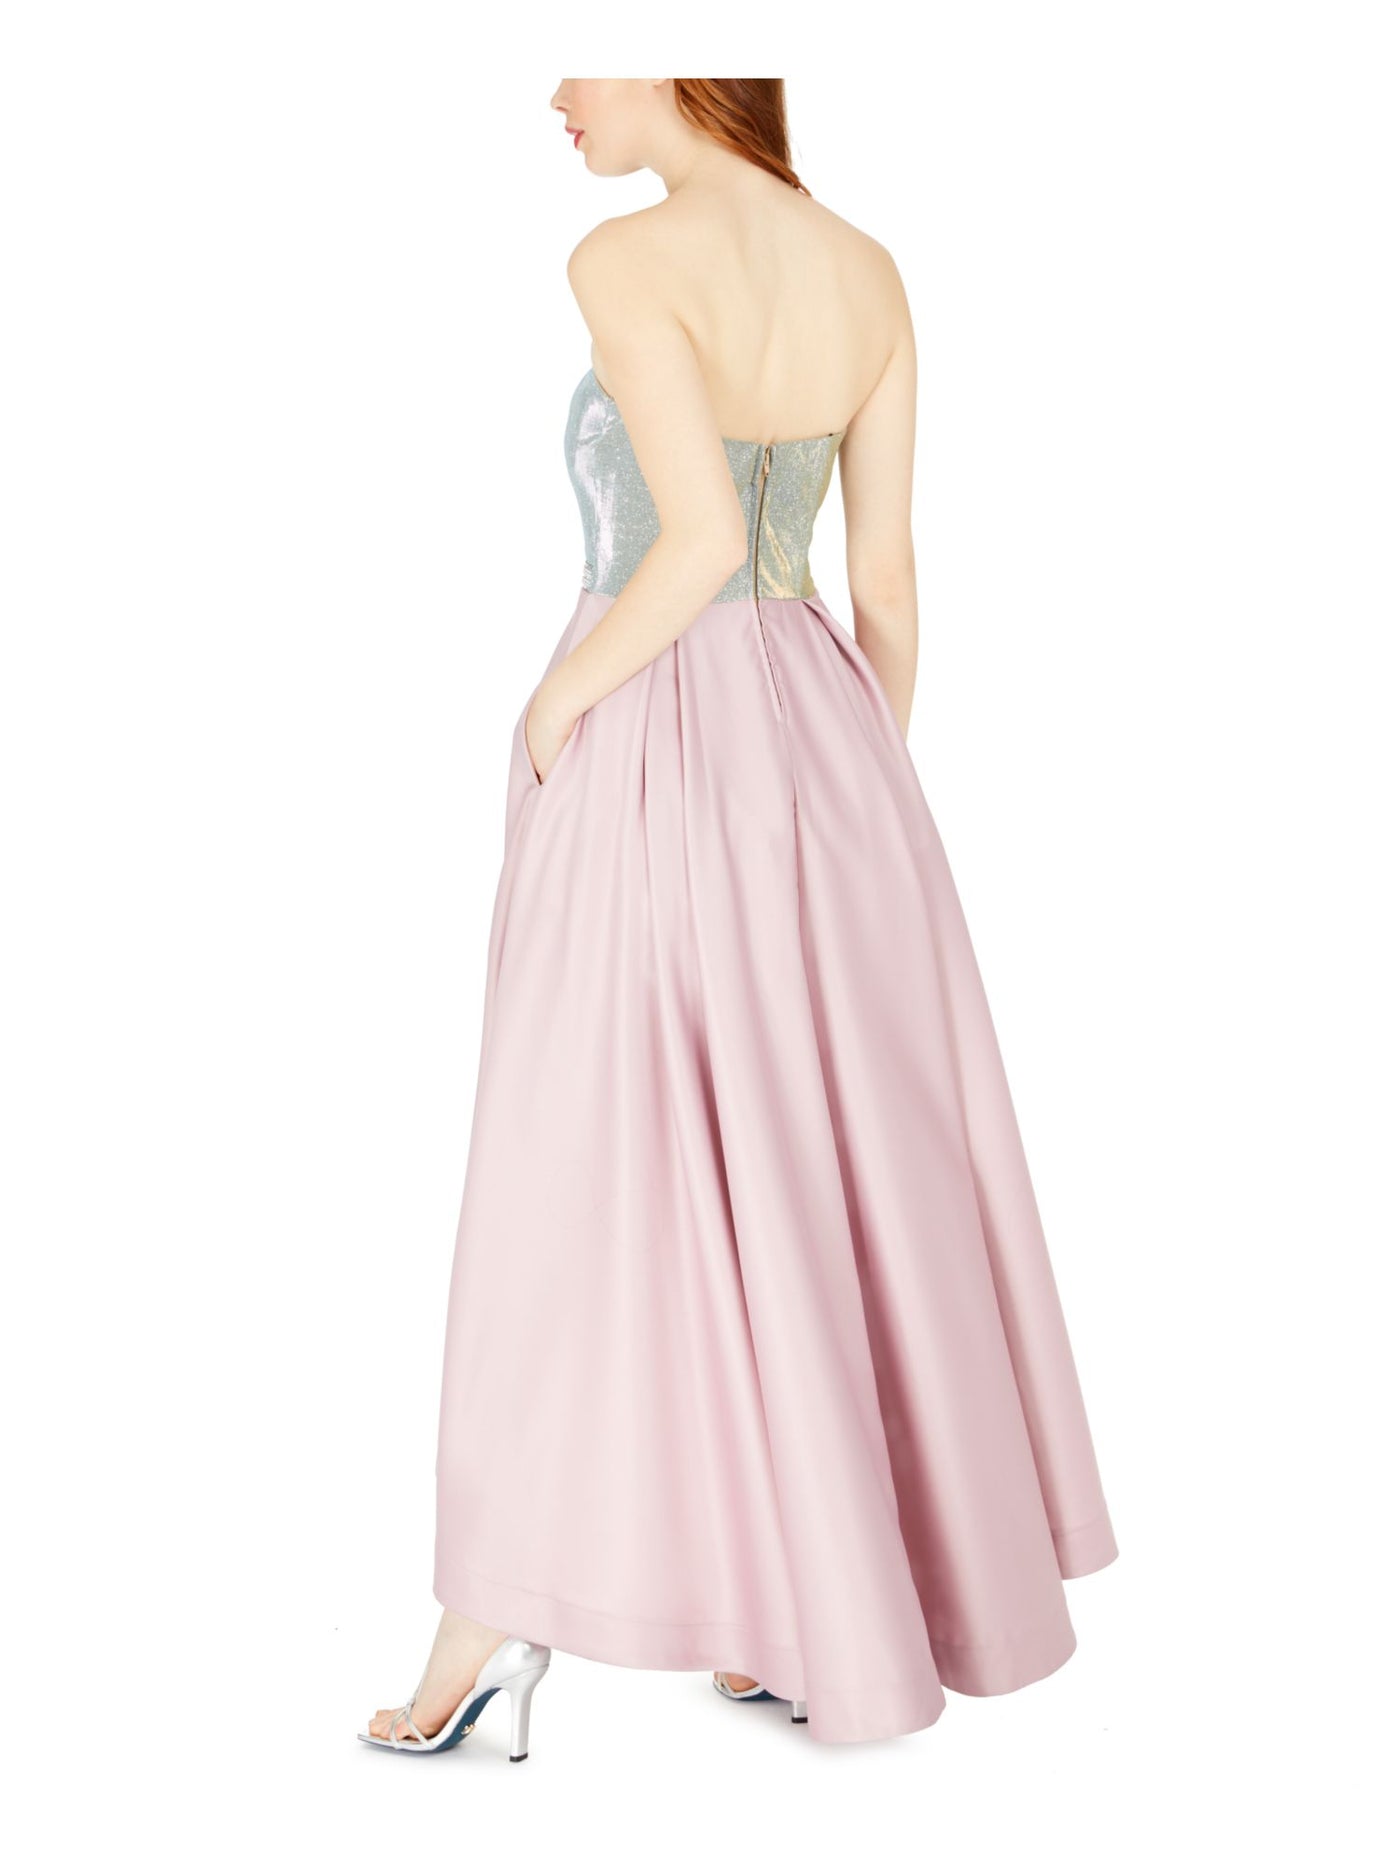 SPEECHLESS Womens Rhinestone Sleeveless Strapless Full-Length Formal Hi-Lo Dress